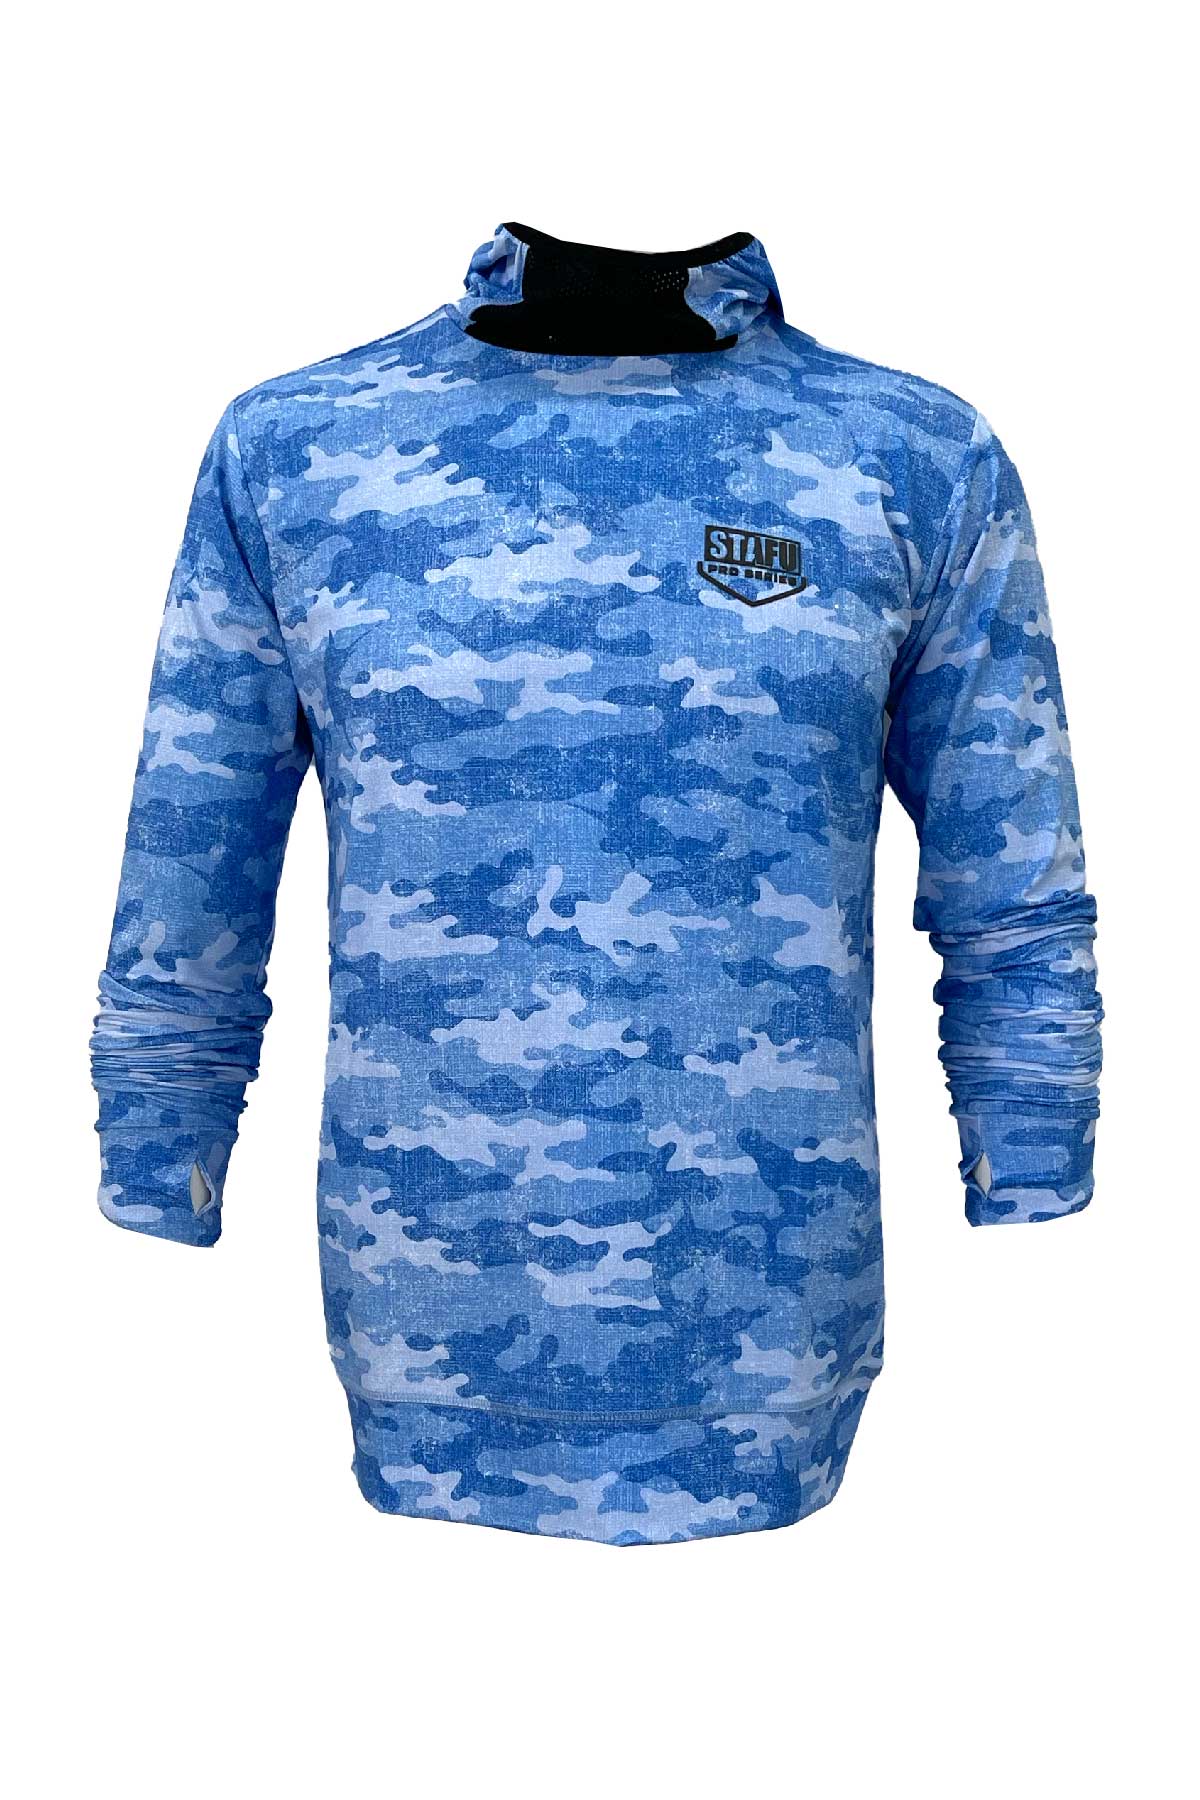 Haka Hooded Long Sleeve Fishing Shirt - Camo - Blue